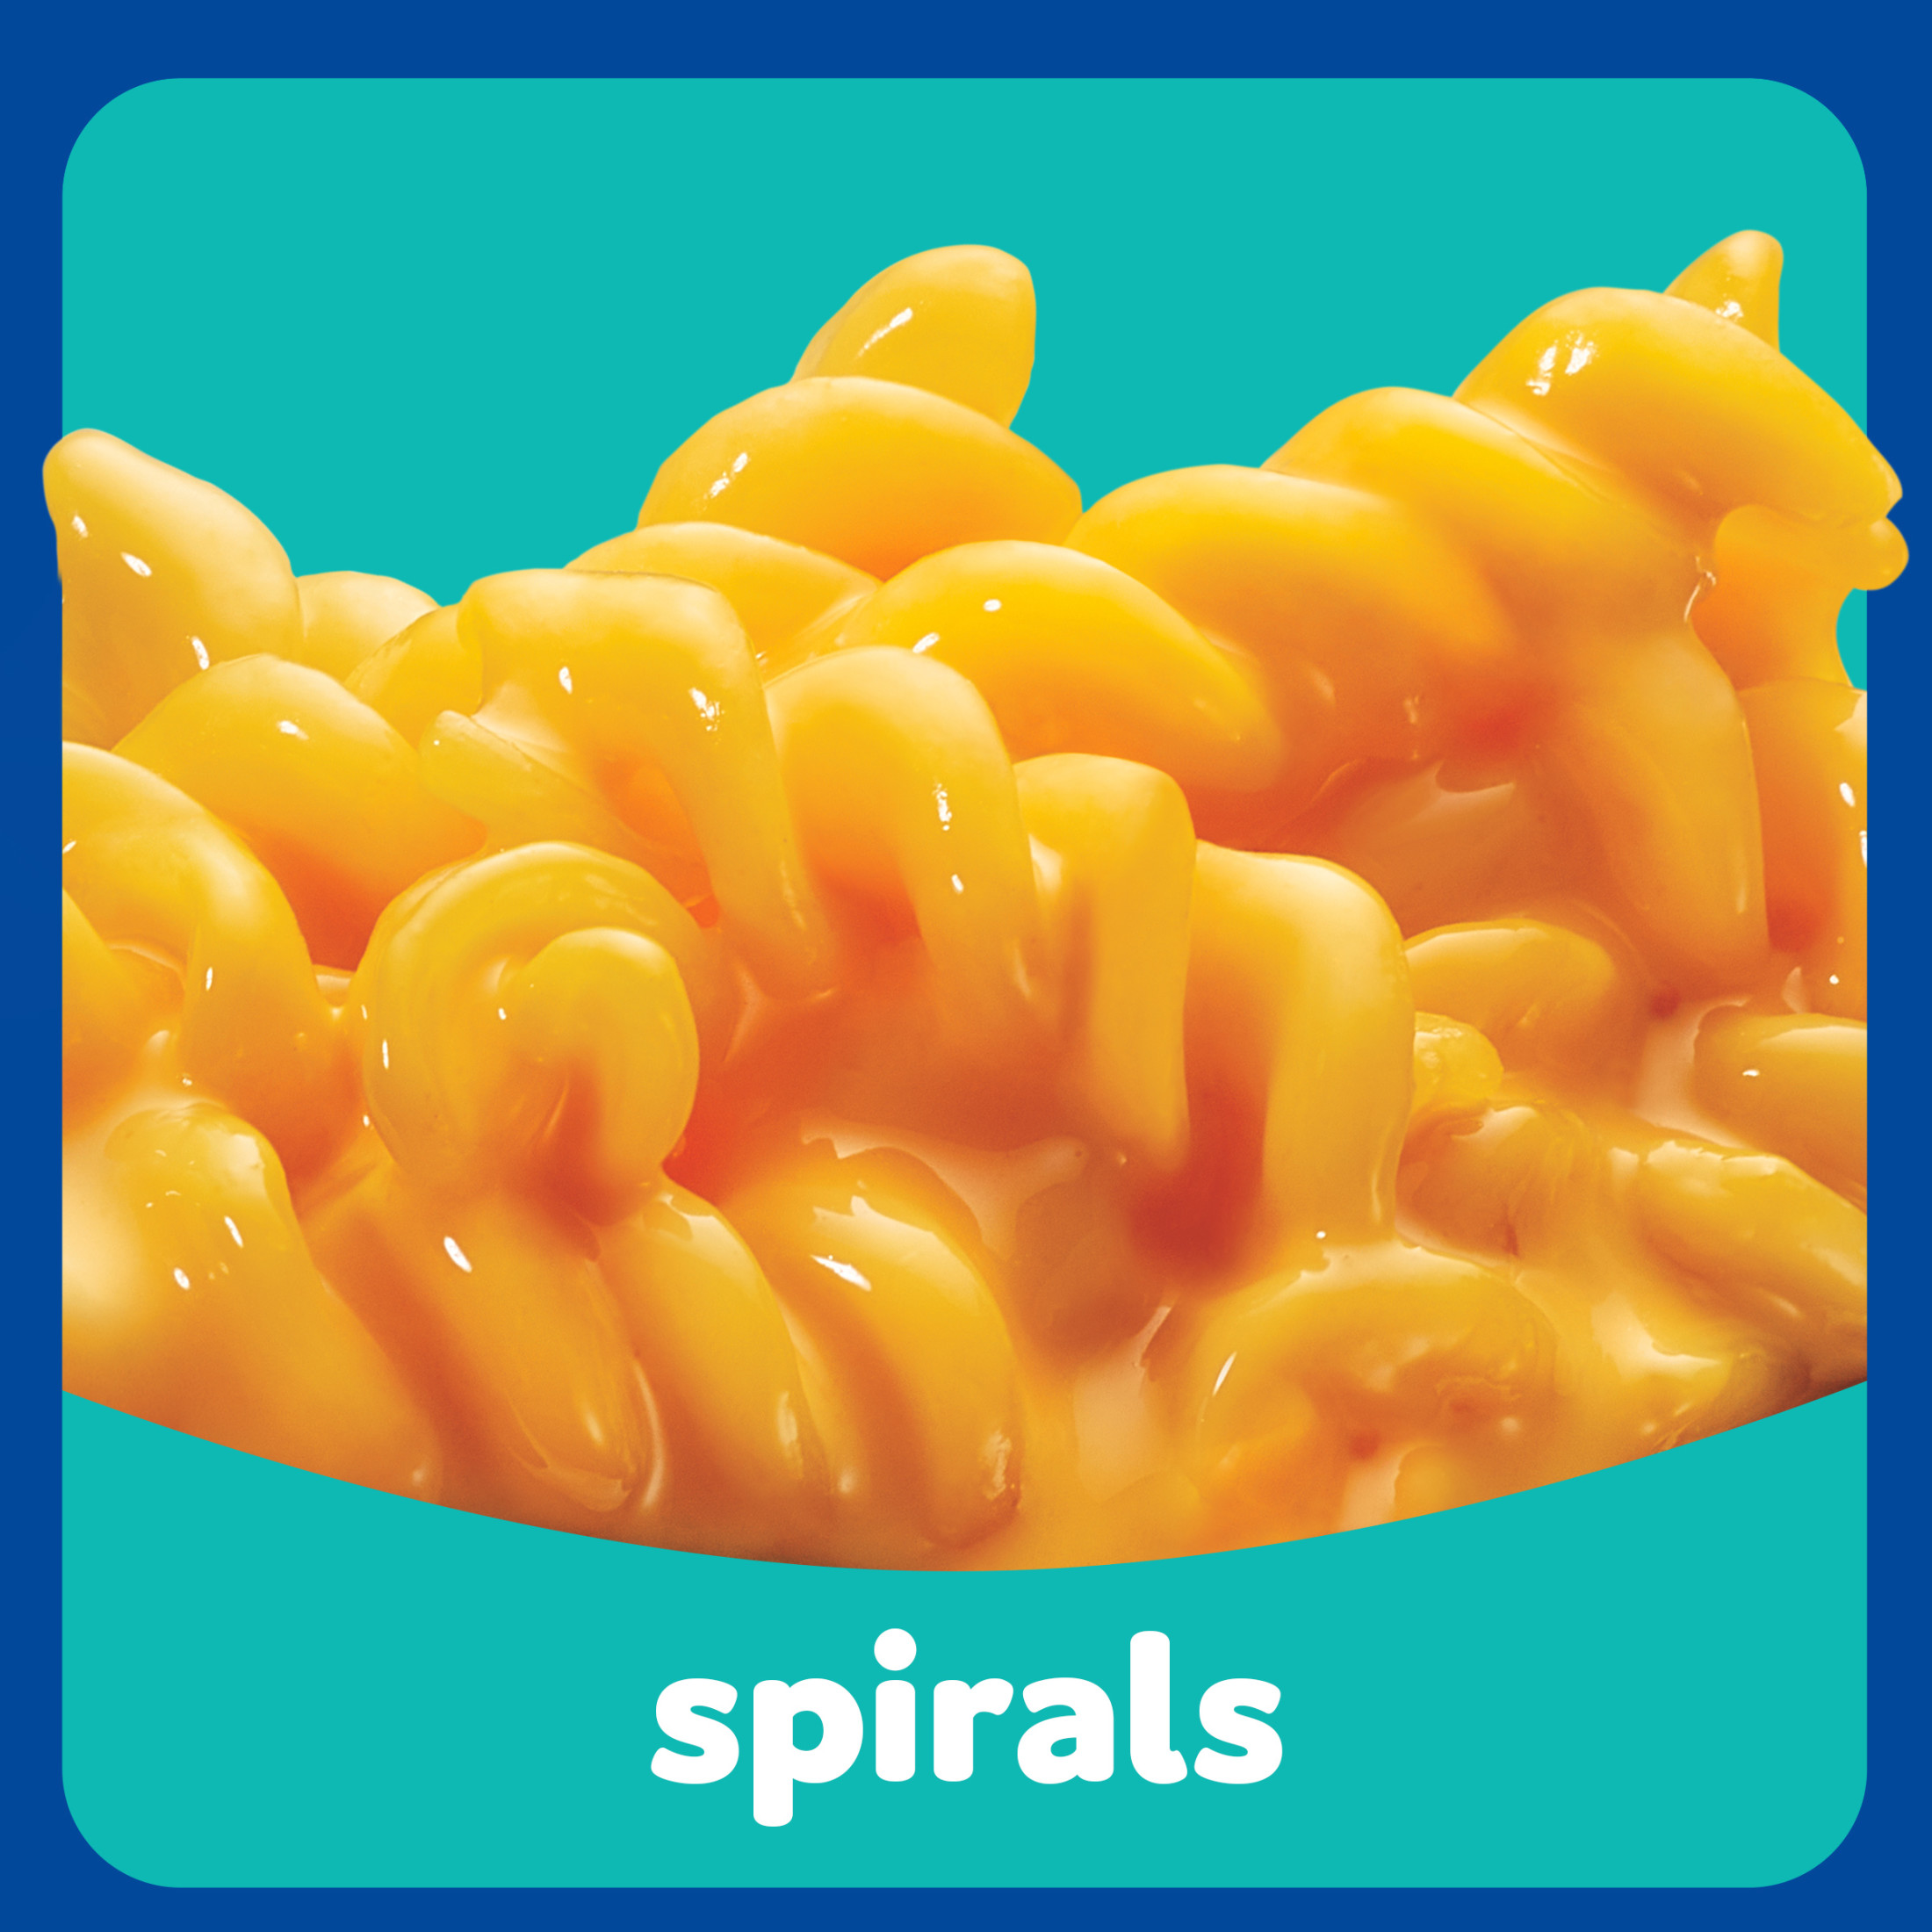 Kraft Spirals Original Mac N Cheese Macaroni and Cheese Dinner, 5.5 oz Box - image 5 of 14